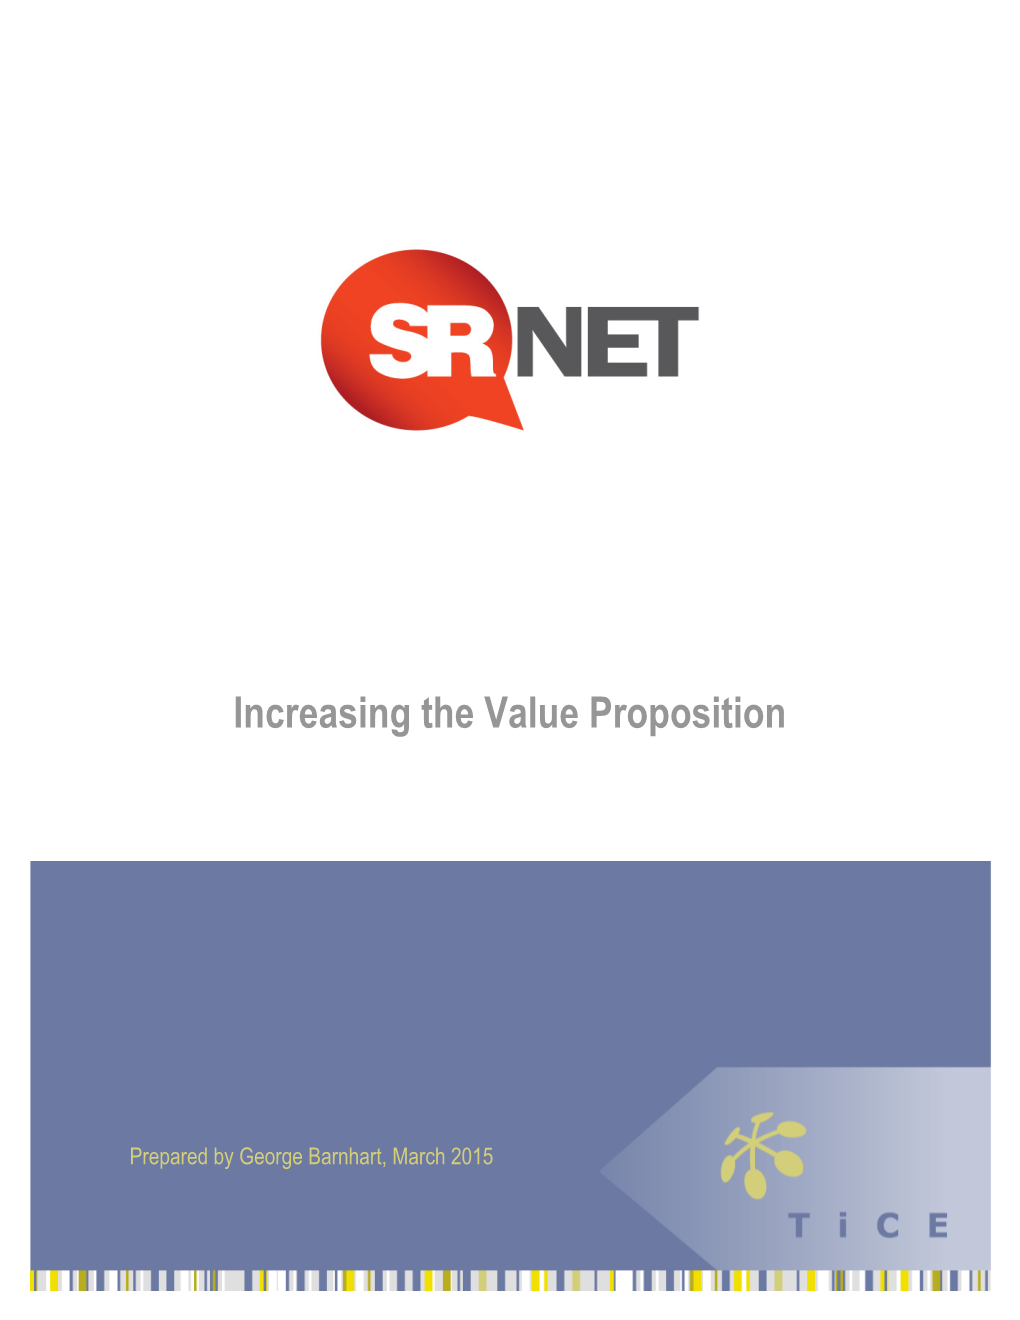 SRNET - Increasing the Value Proposition